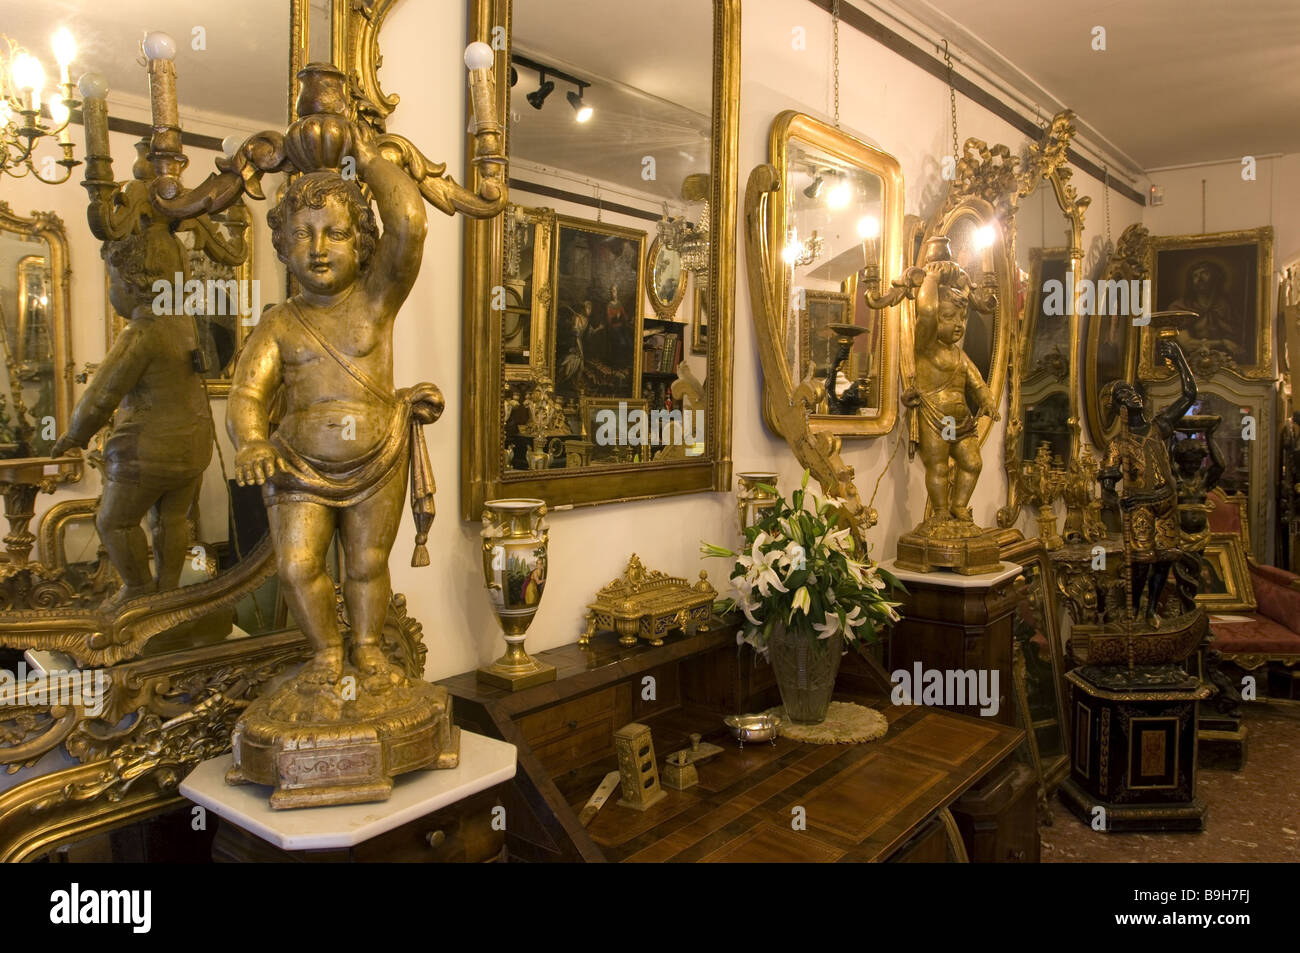 Italie Rome Via dei Coronari antique shop interior Photo Stock - Alamy